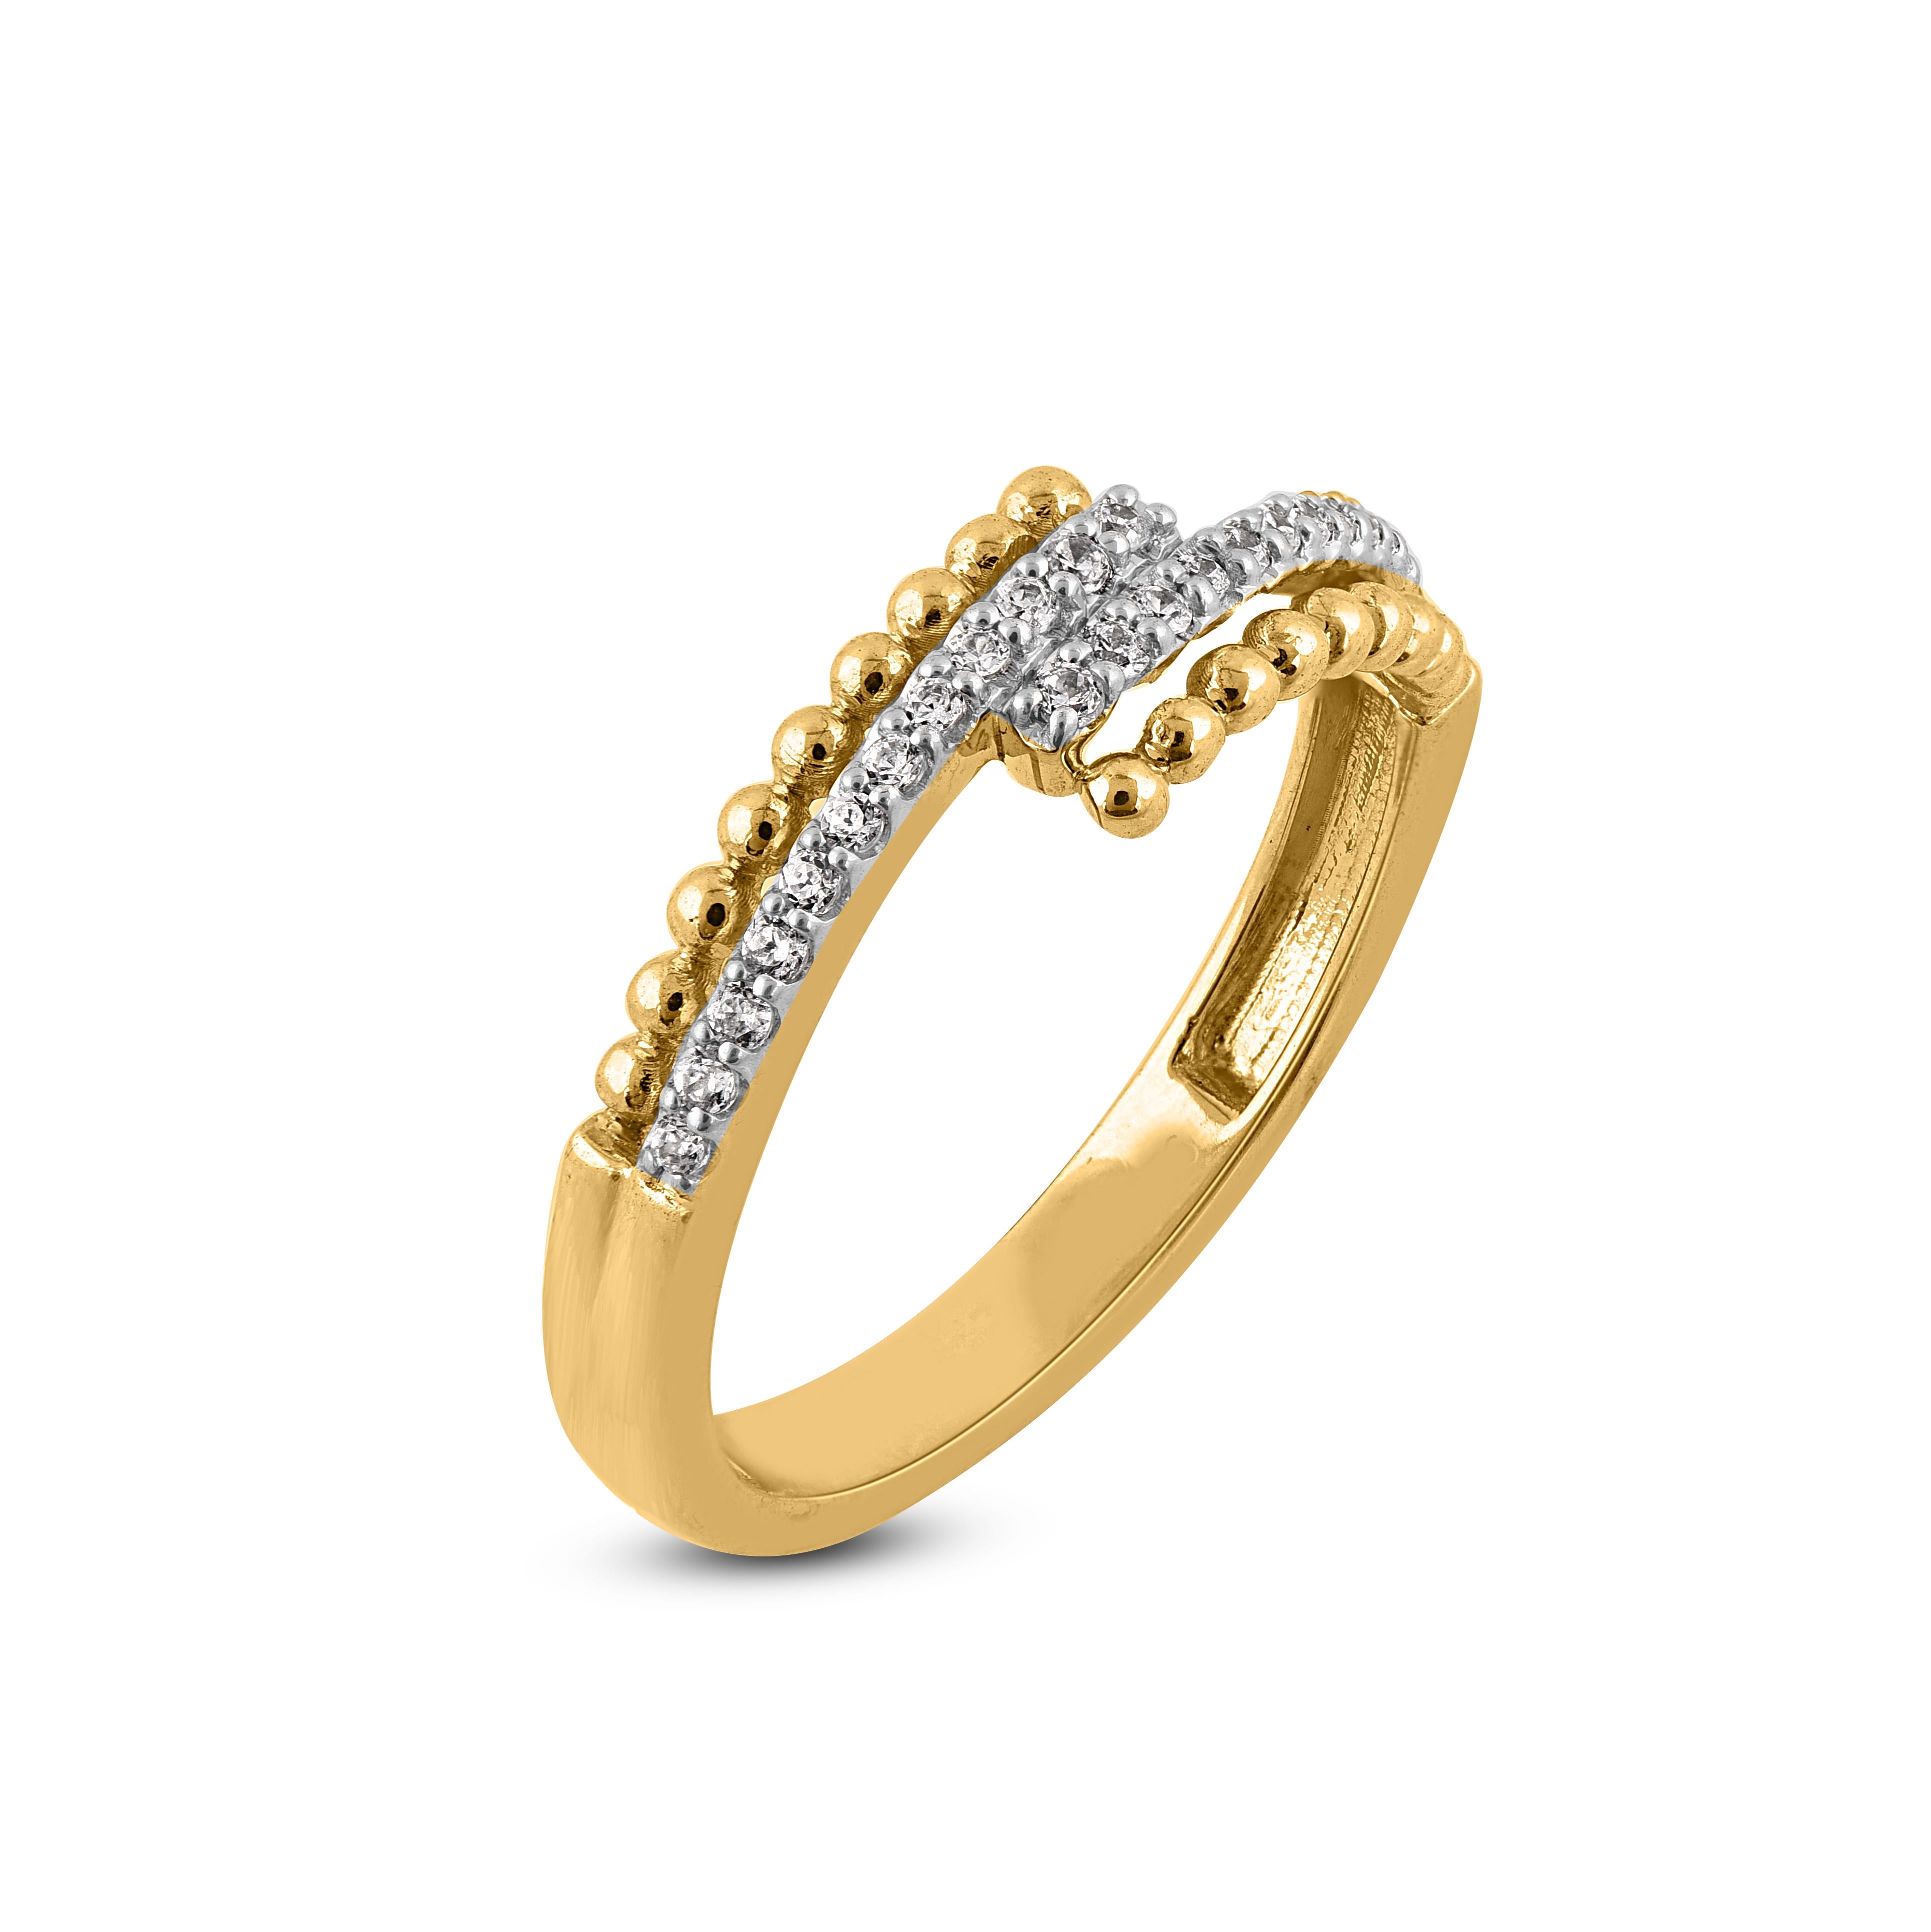 Modernist TJD 0.15 Carat Brilliant Cut Diamond 14Karat Yellow Gold Bypass Fashion Ring For Sale